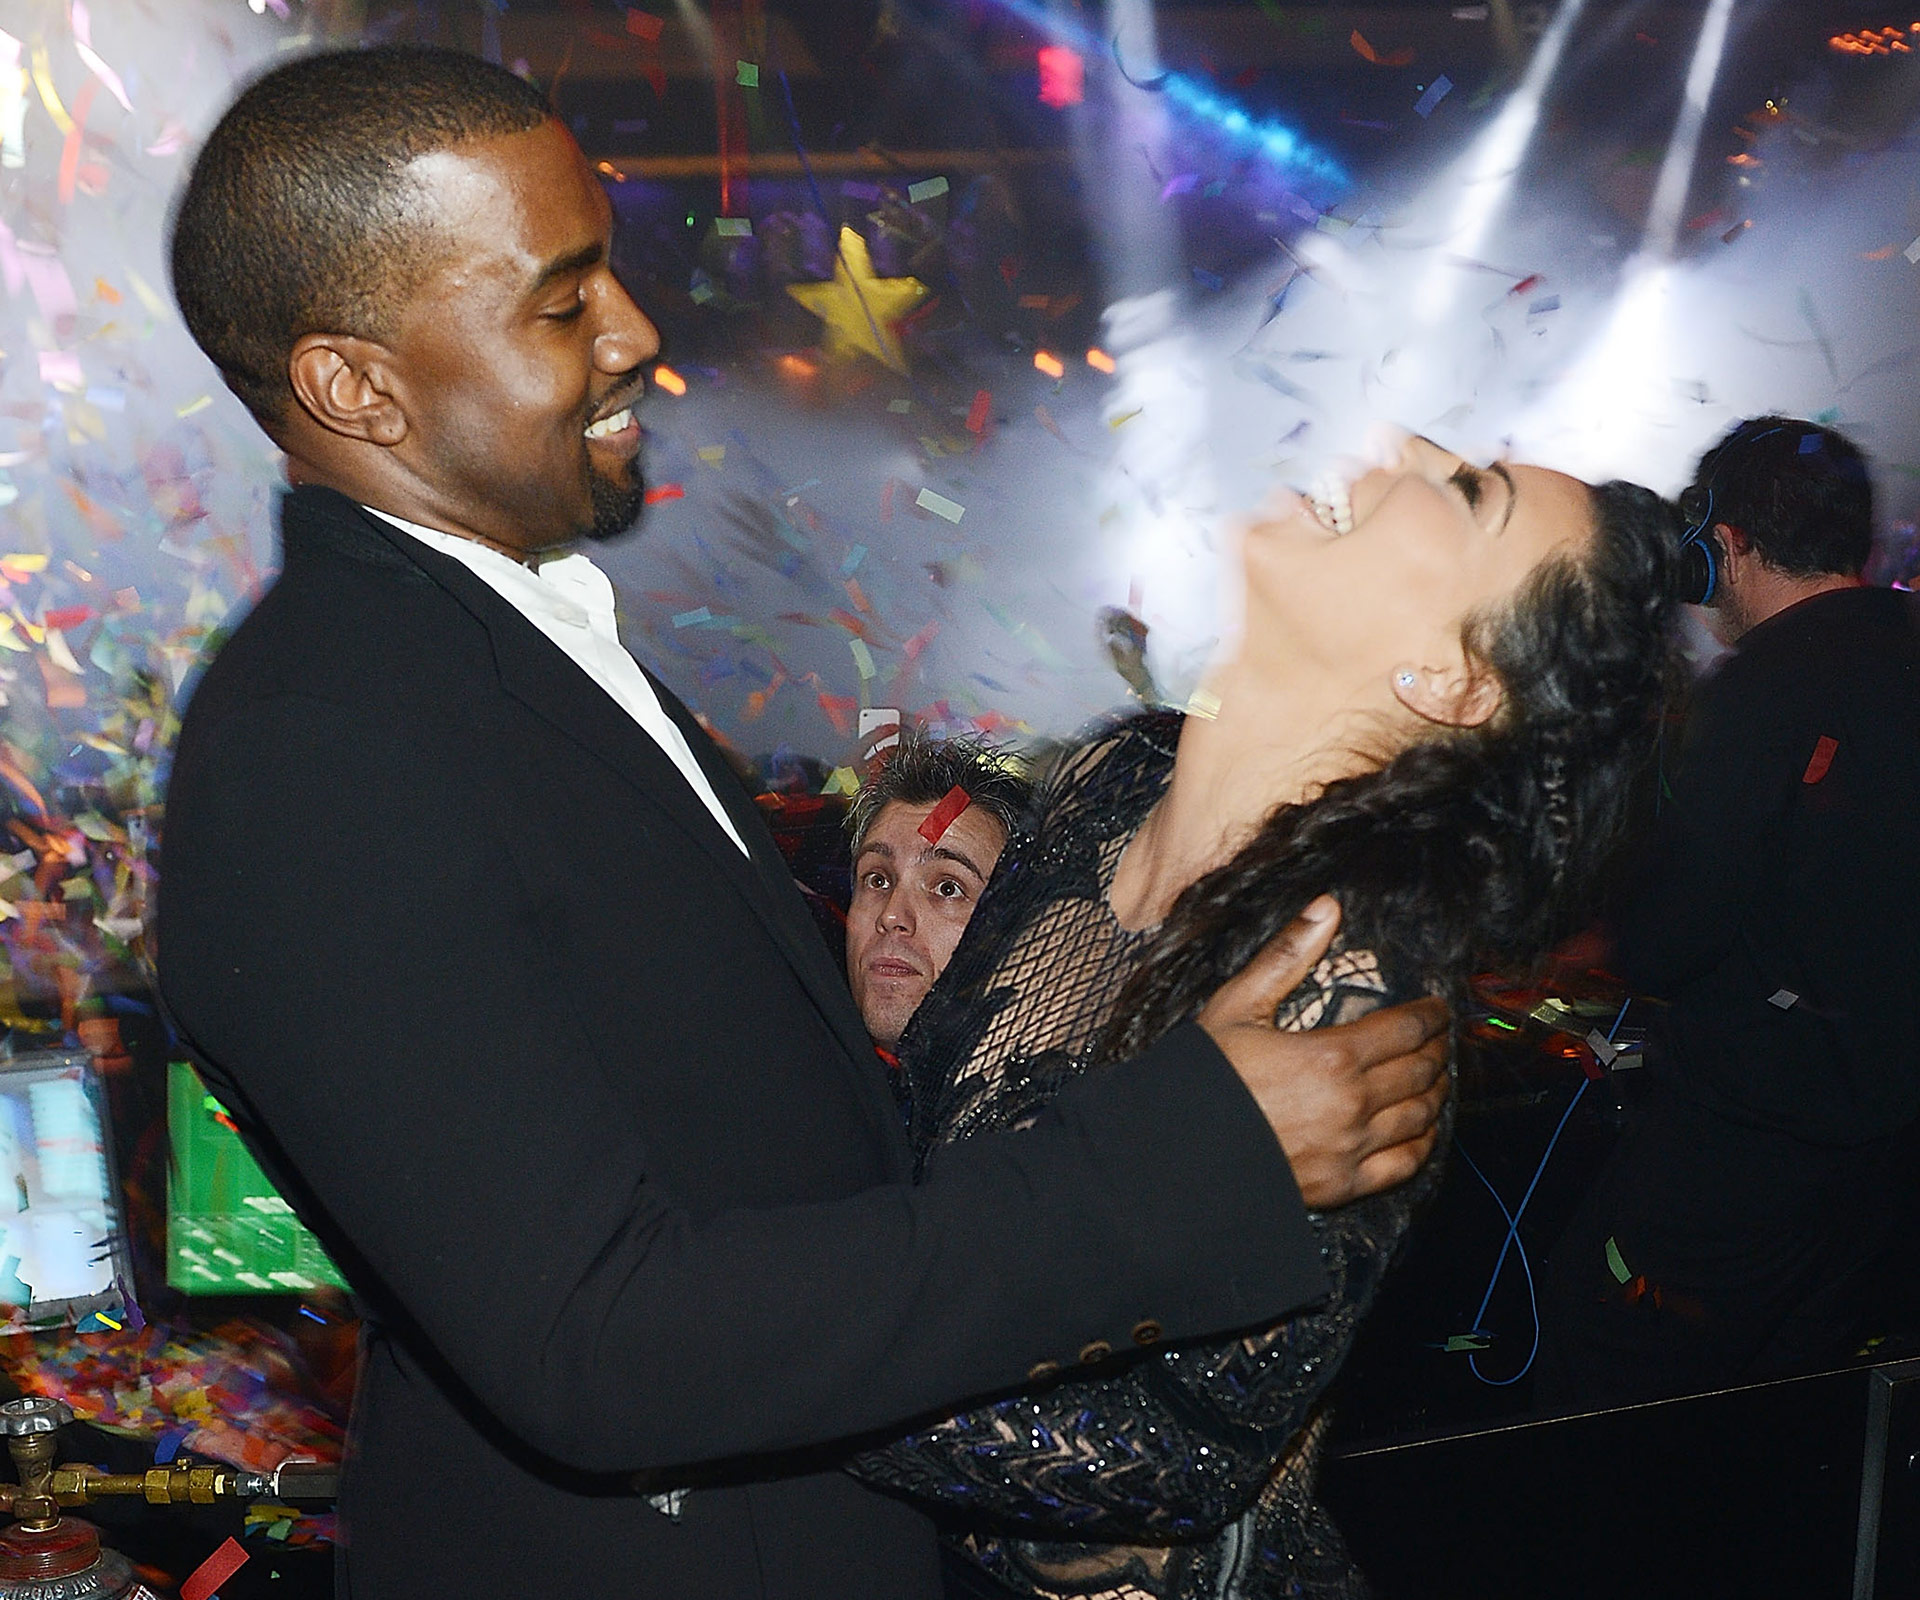 Kim Kardashian and Kanye West 